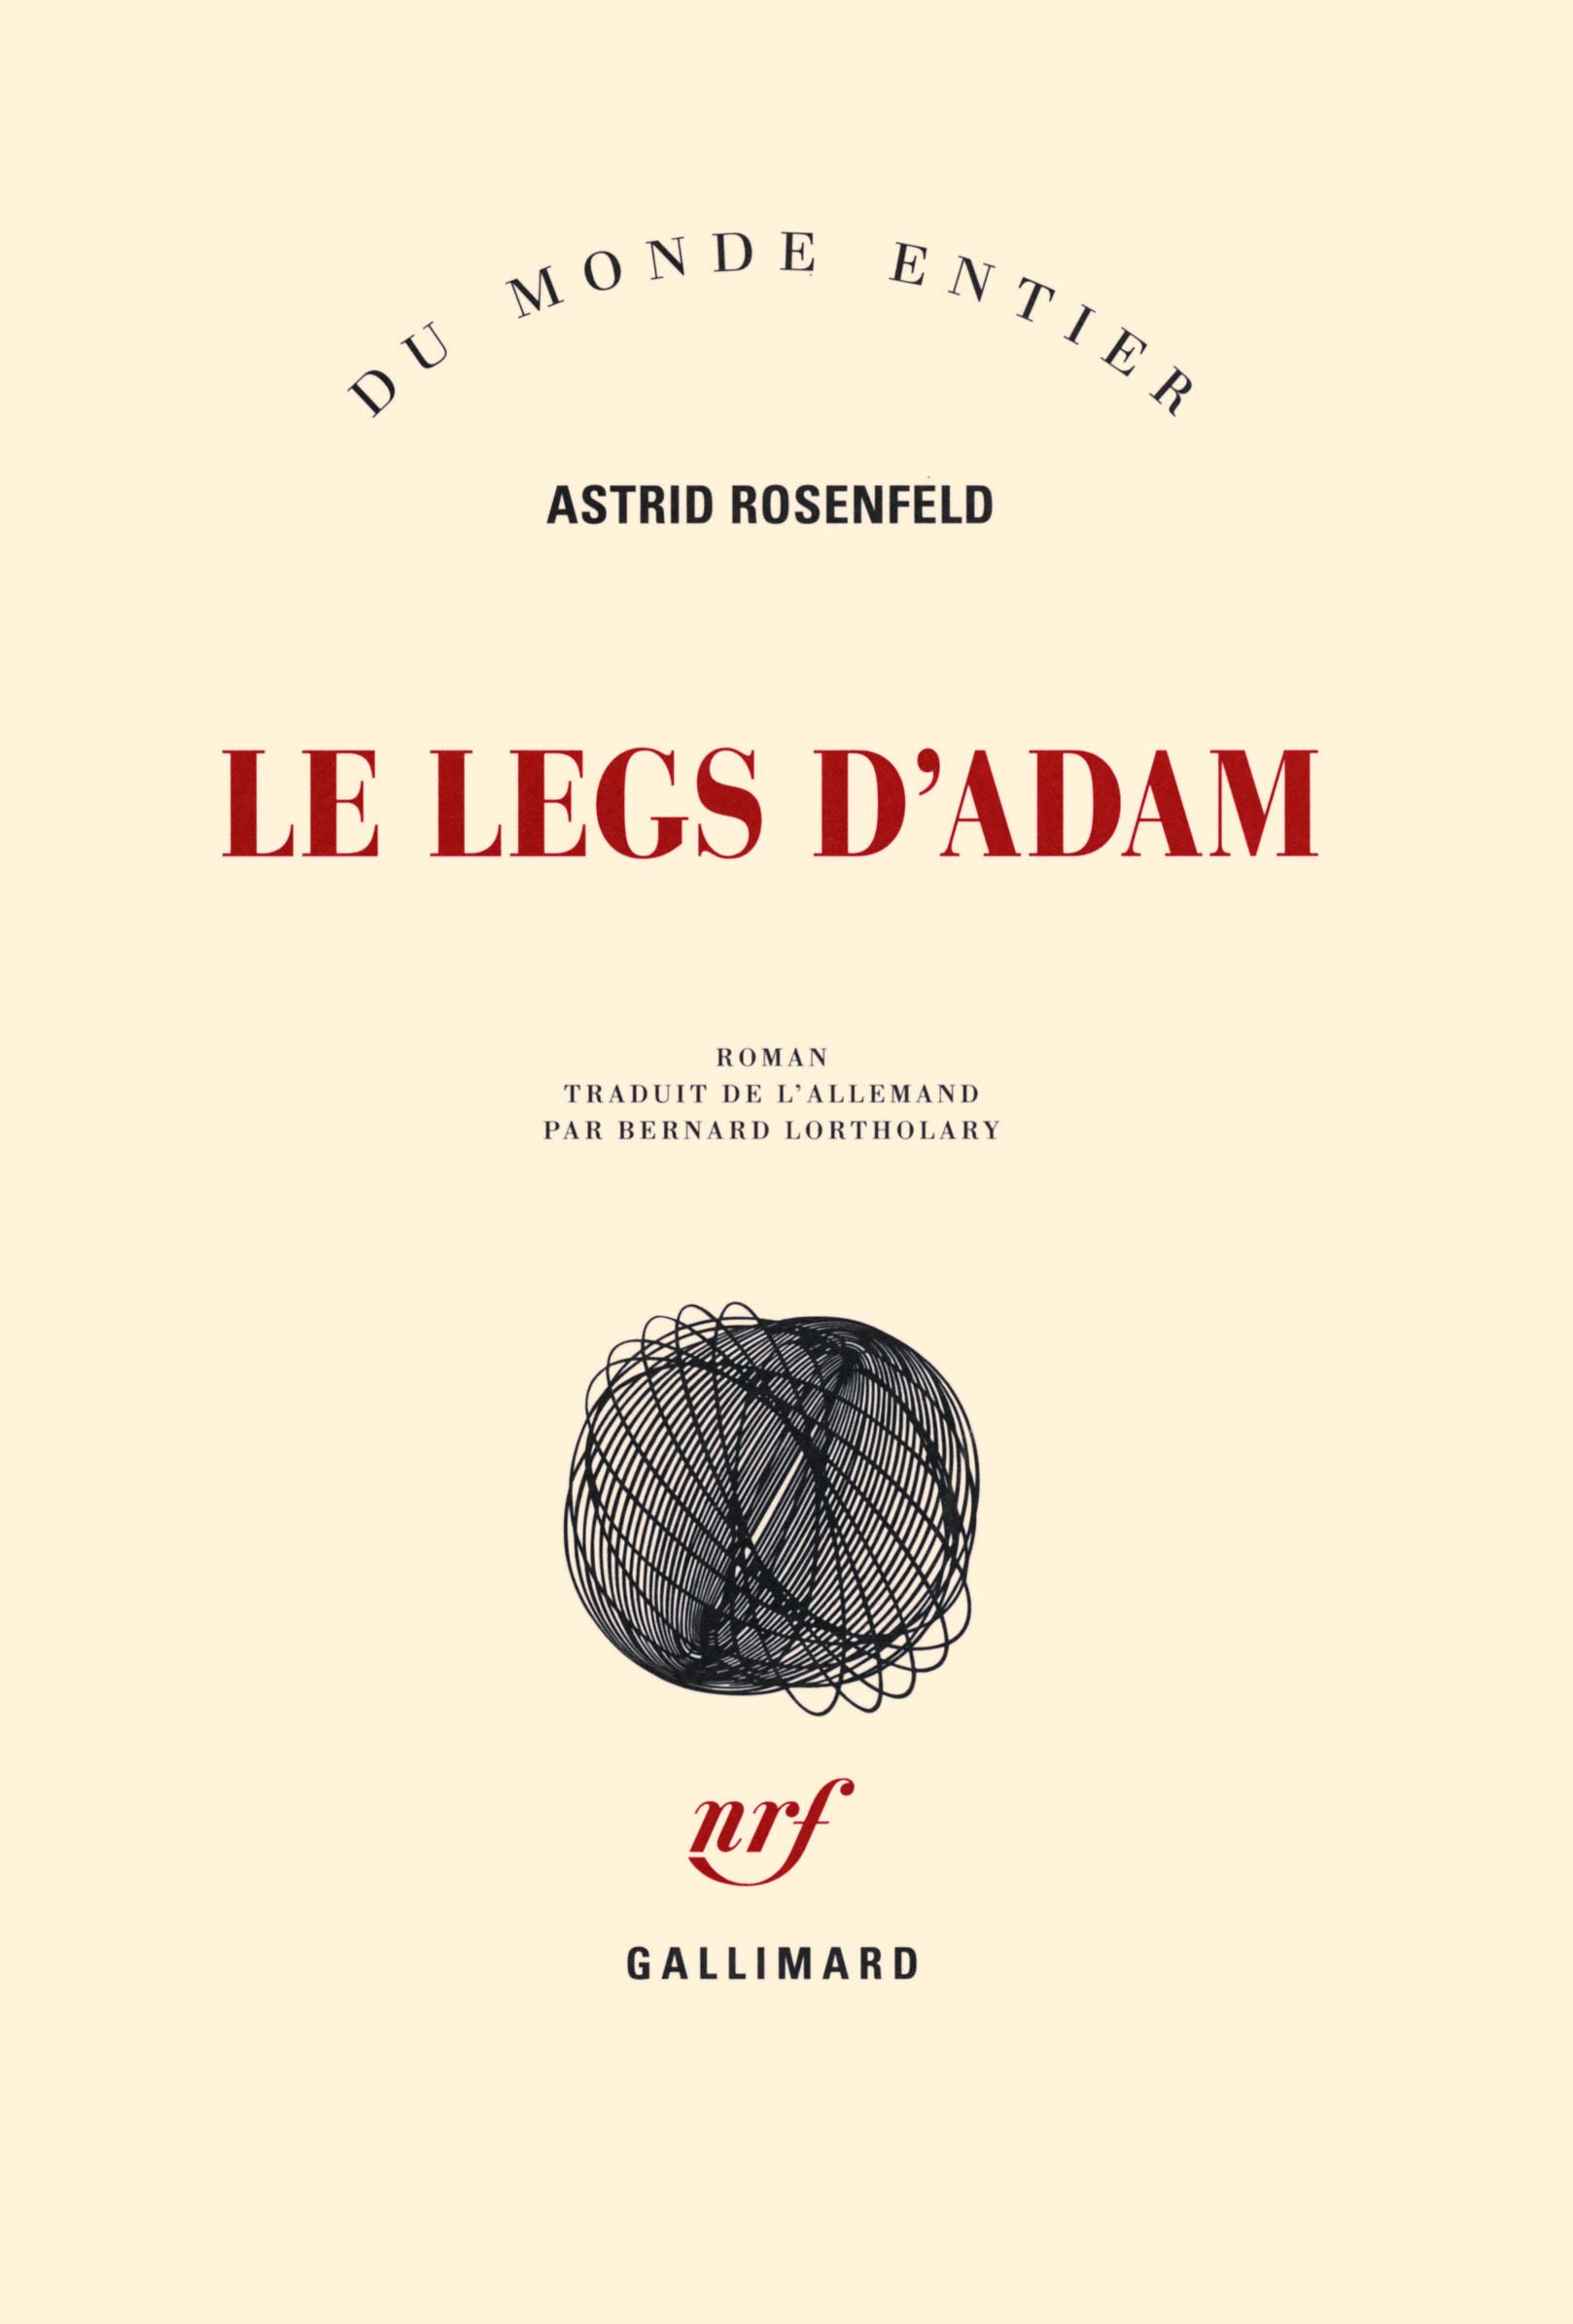 Le Legs d’Adam  Astrid Rosenfeld